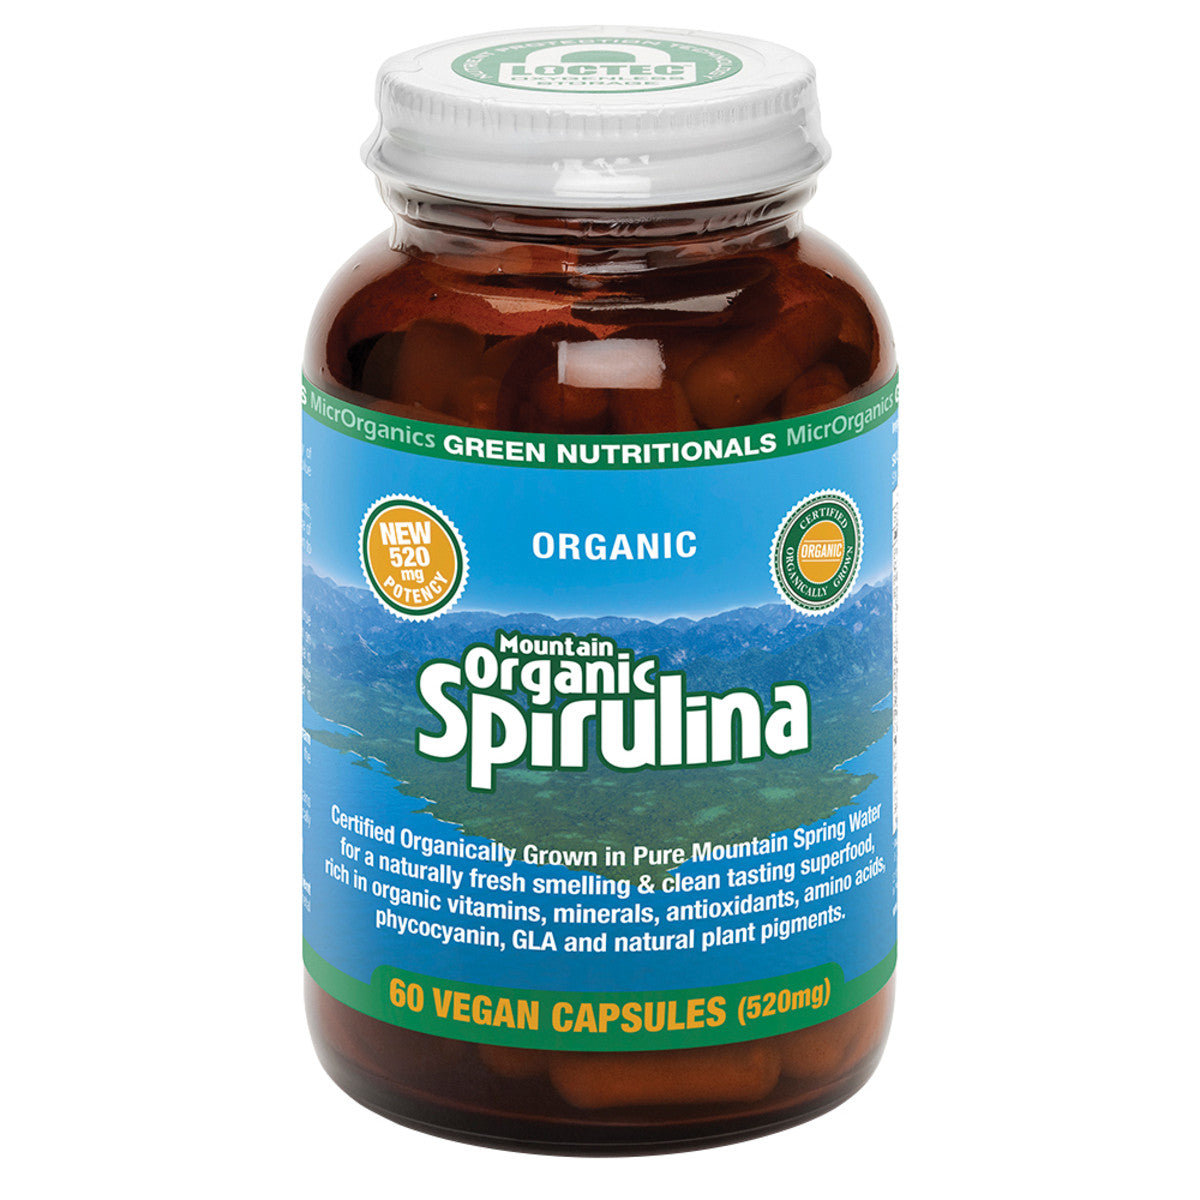 Green Nutritionals - Mountain Organic Spirulina 520mg